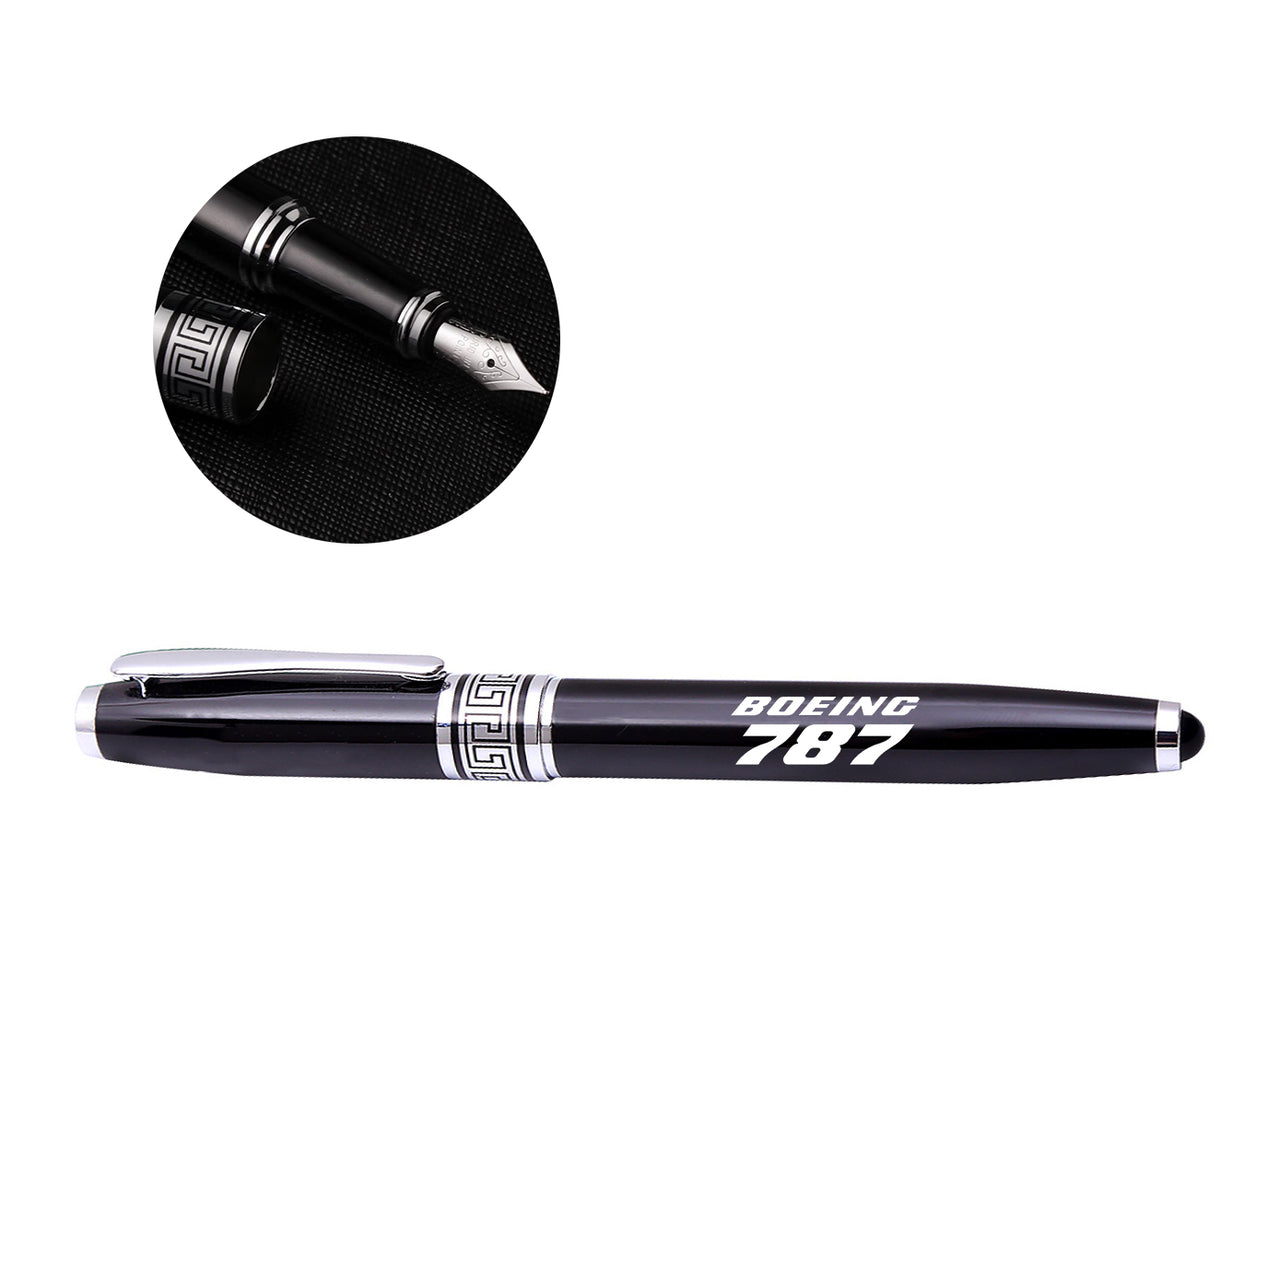 Boeing 787 & Text Designed Pens